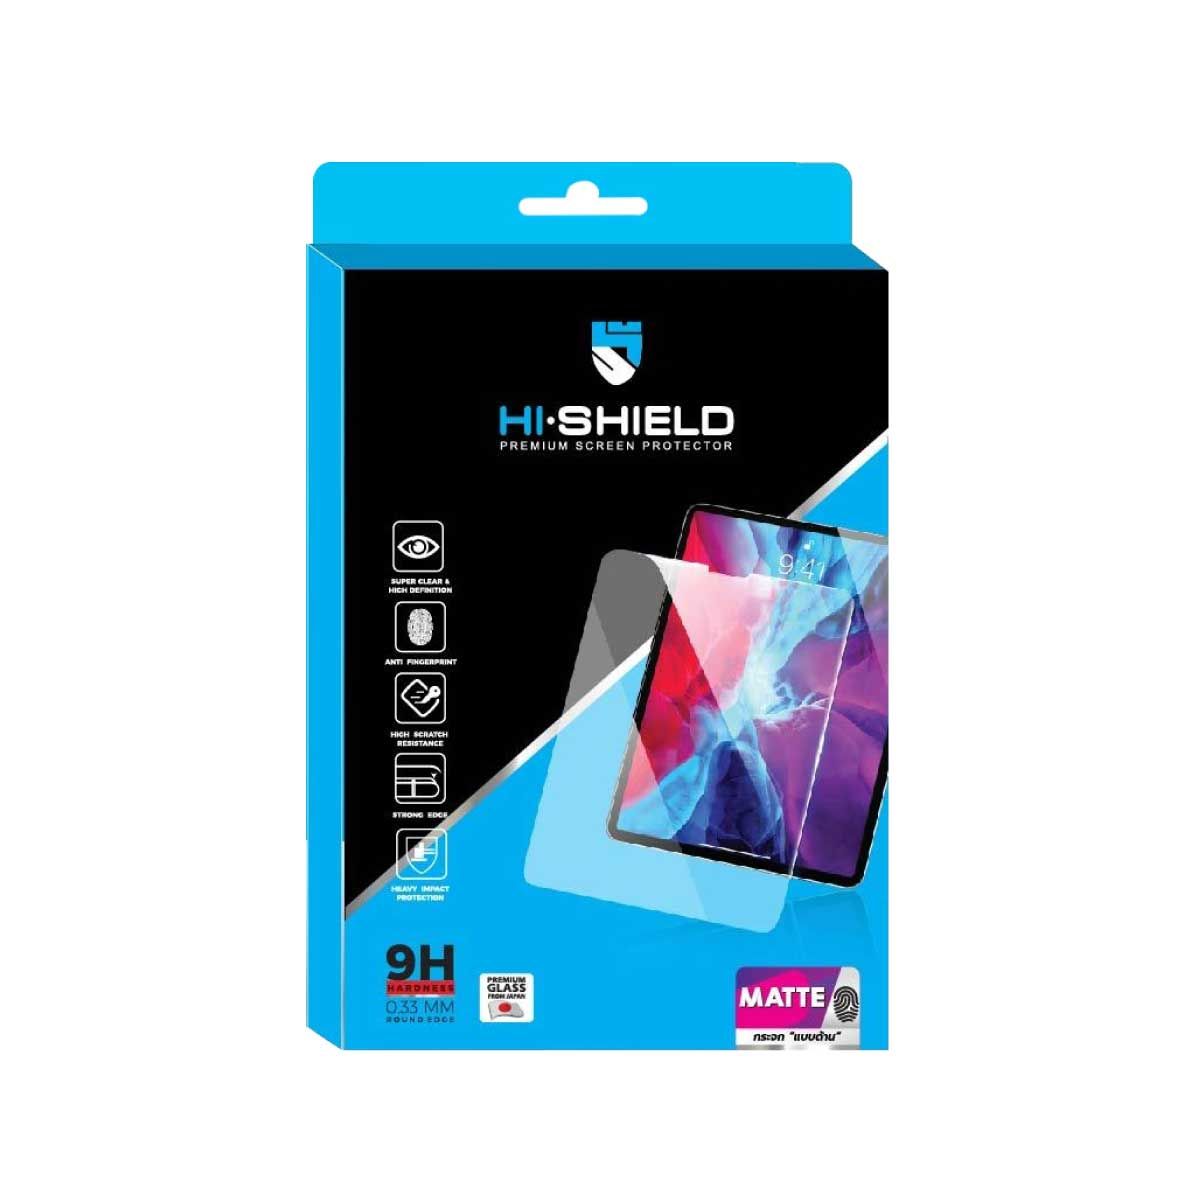 Hi-Shield Matte Tempered Glass 0.33 mm. ฟิล์มกระจกนิรภัยแบบด้านสำหรับ iPad Pro 13" (2024)